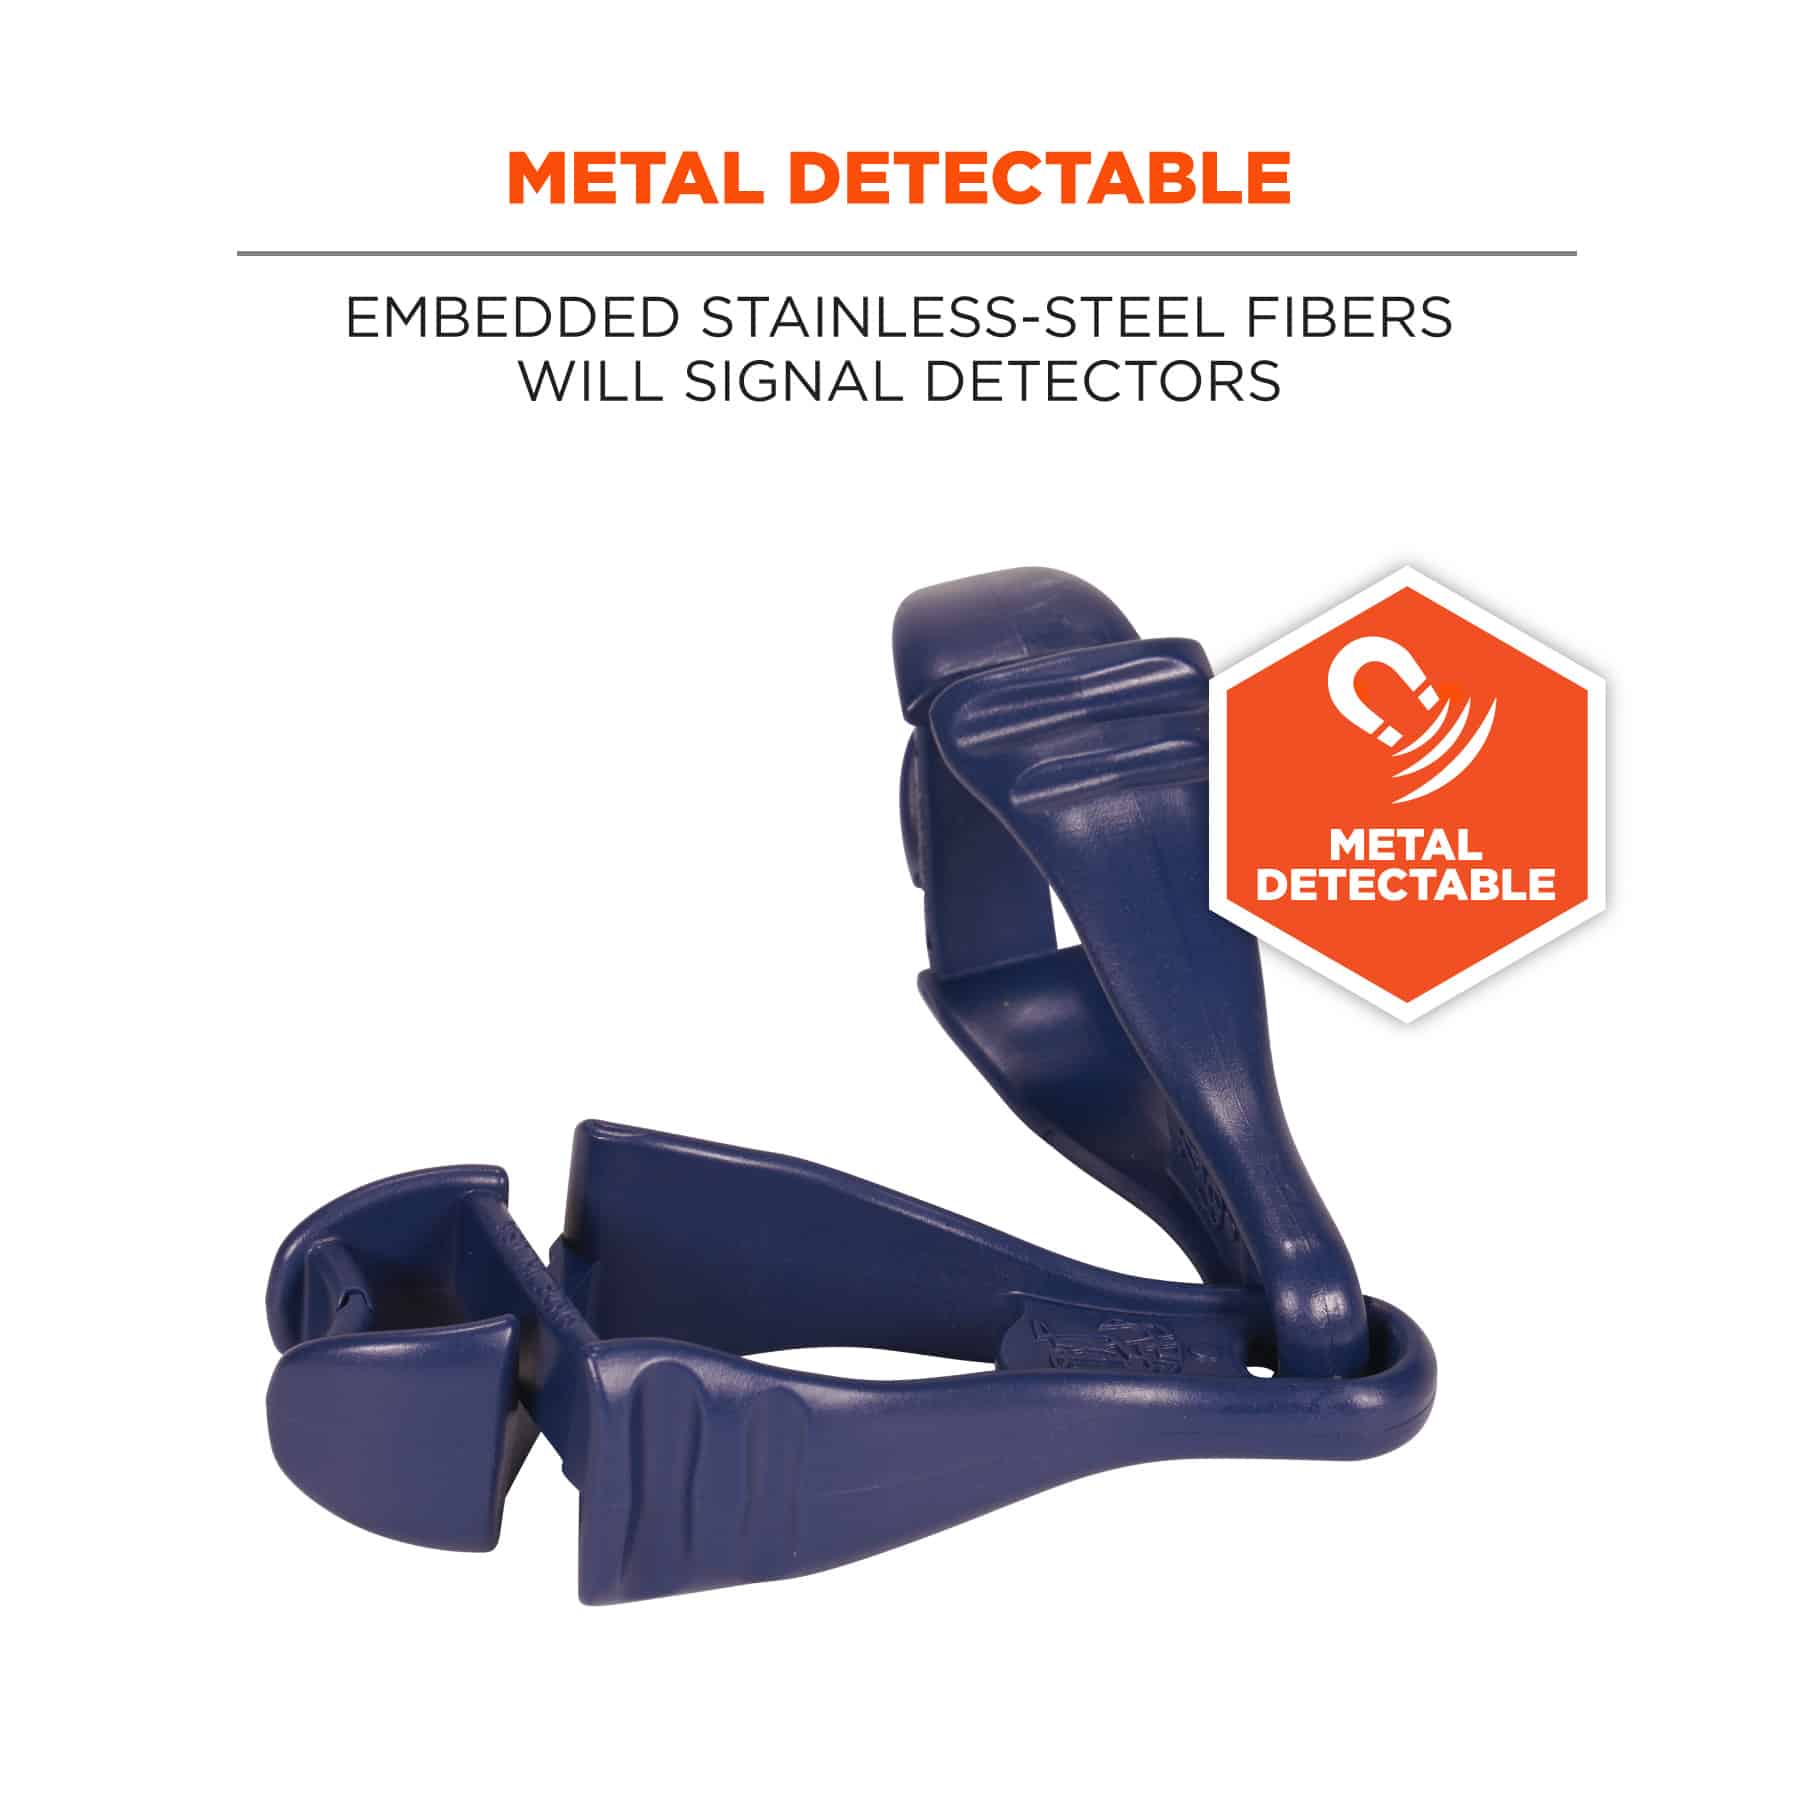 https://www.ergodyne.com/sites/default/files/product-images/19132-3400md-metal-detectable-glove-clip-holder-metal-detectable.jpg